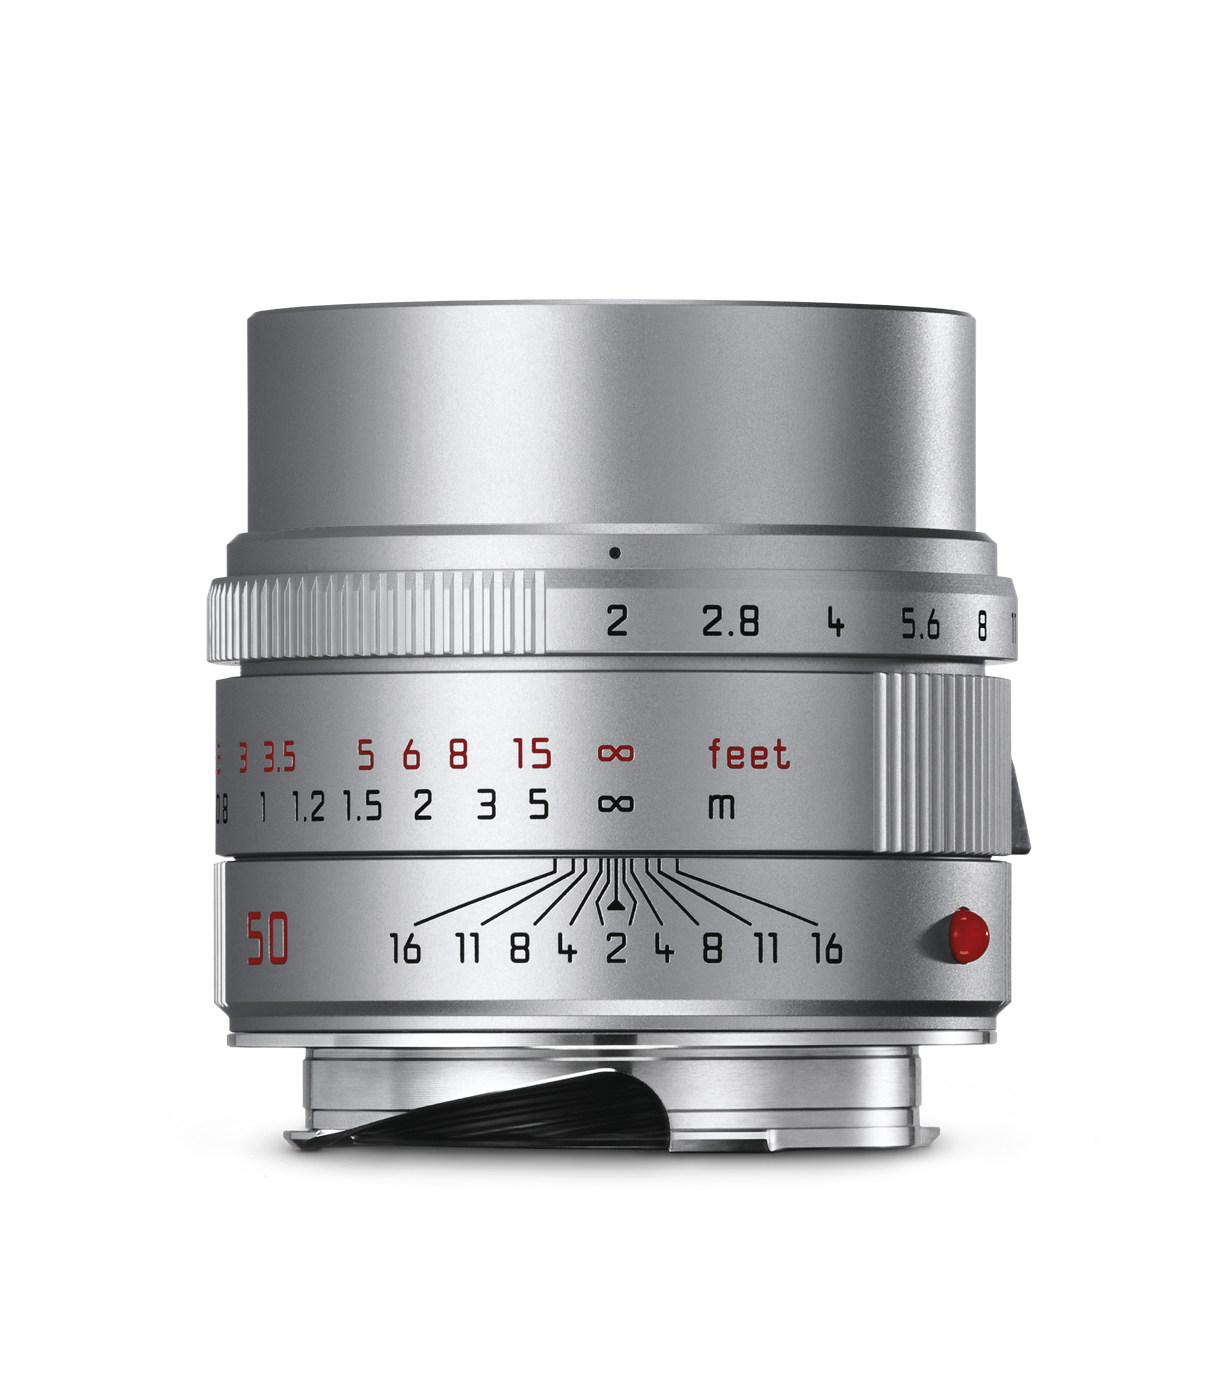 APO-Summicron-M 50 f/2 ASPH. | Leica Camera AG